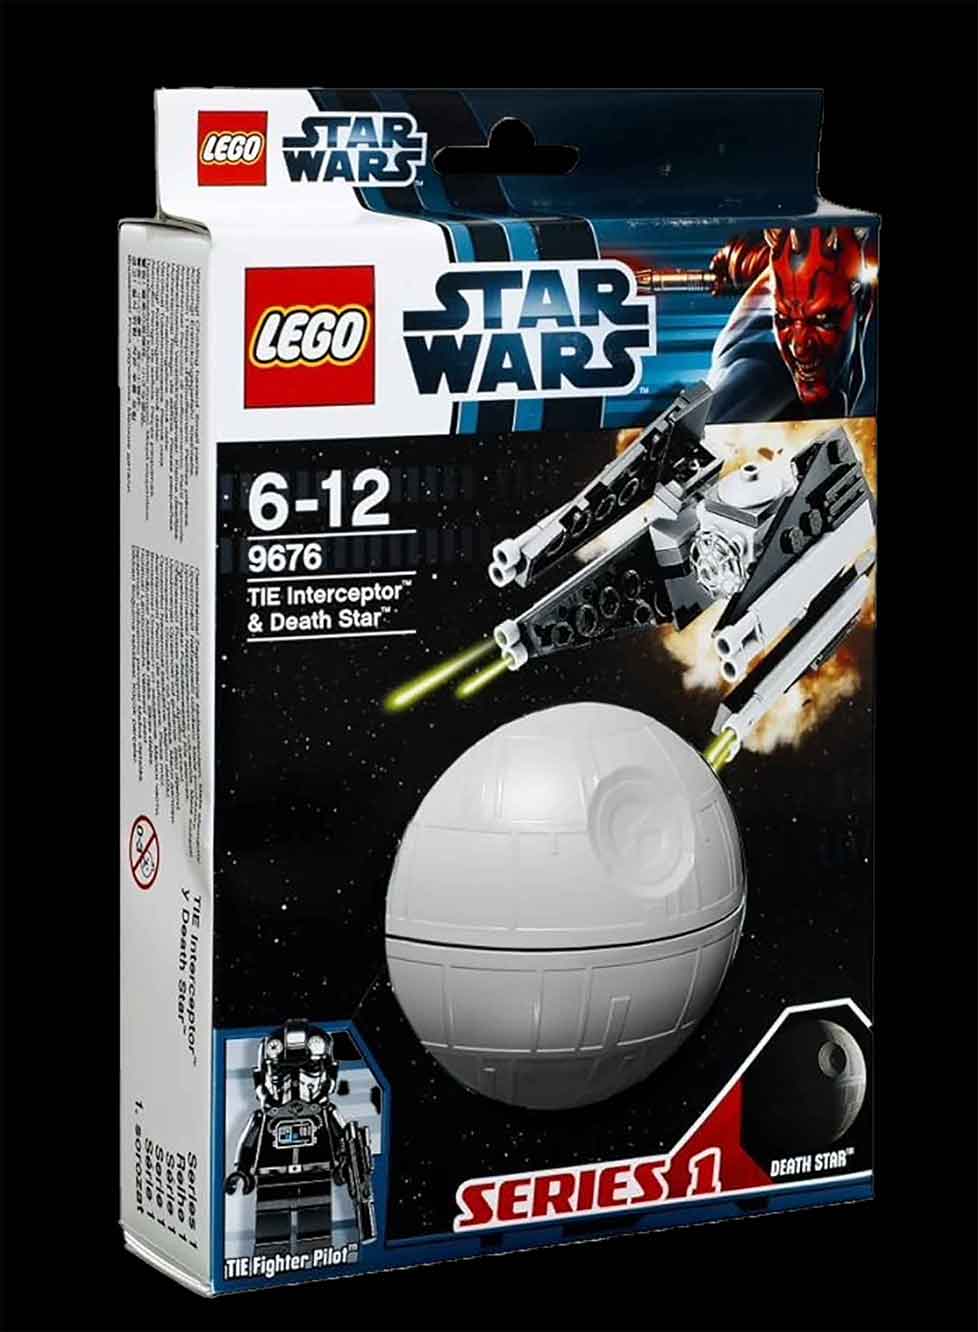 LEGO Star Wars box of TIE Interceptor and Death Star